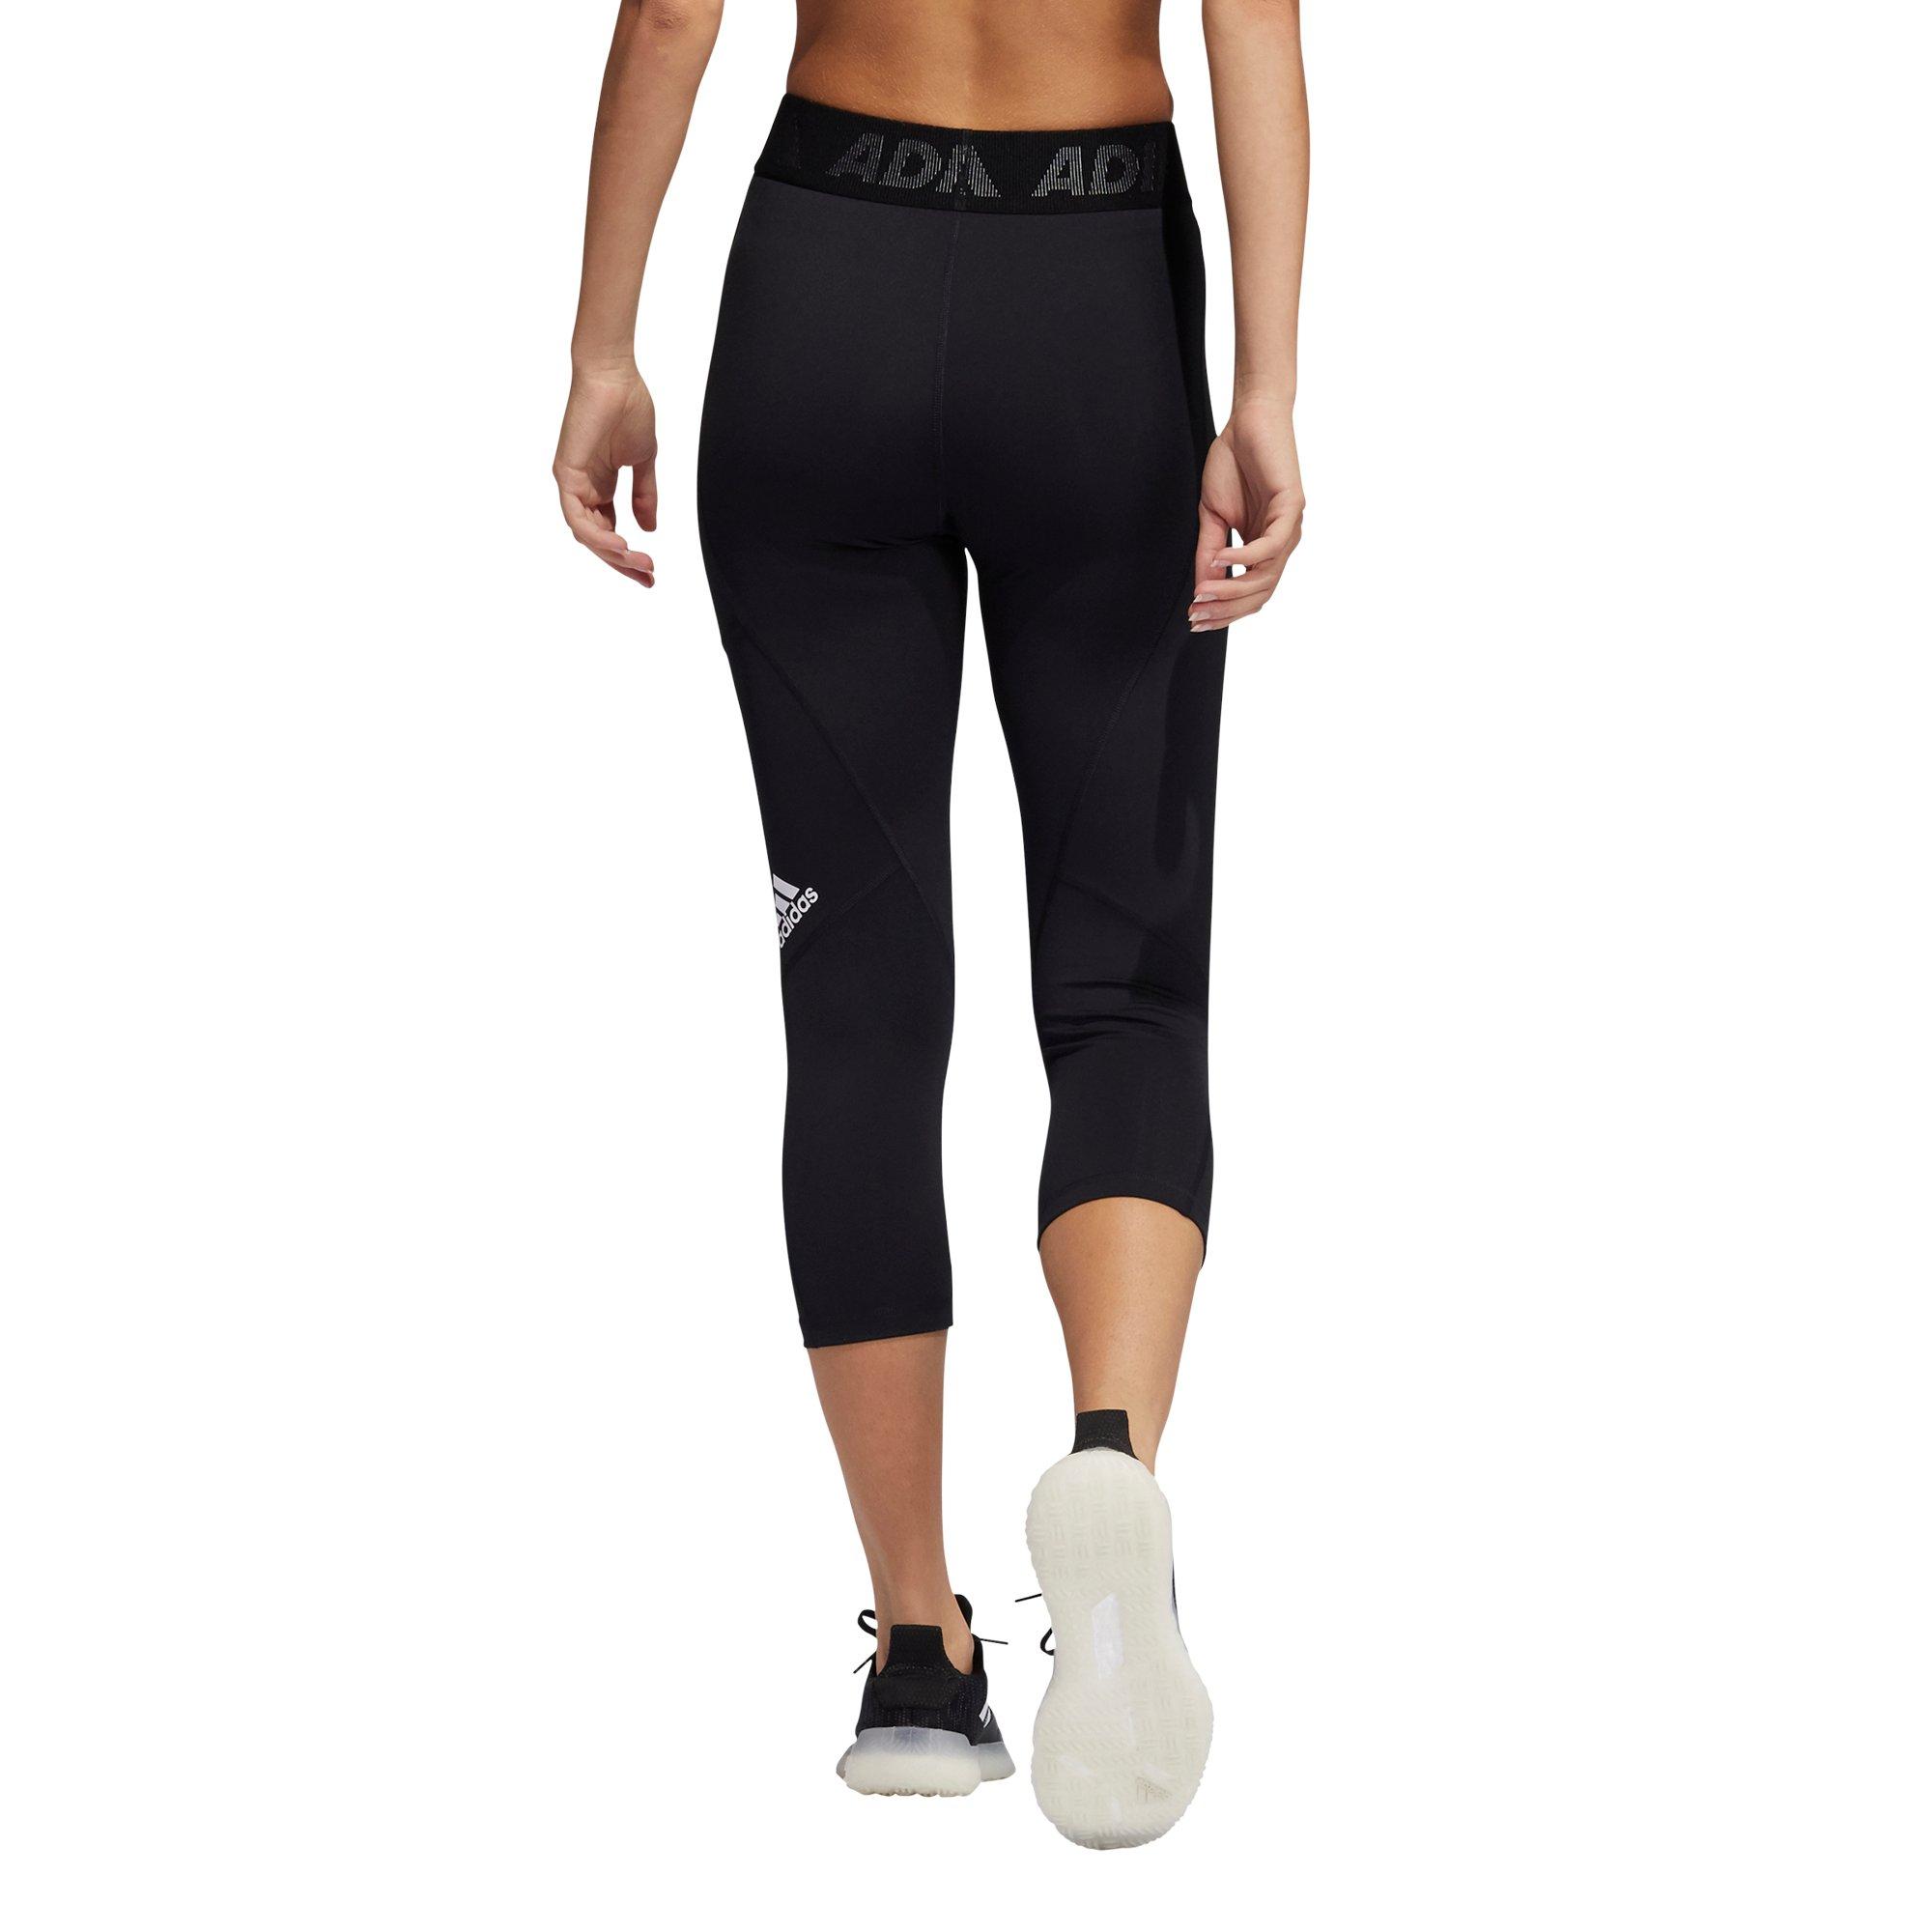 Techfit 3/4 gym leggings, black, Adidas Performance